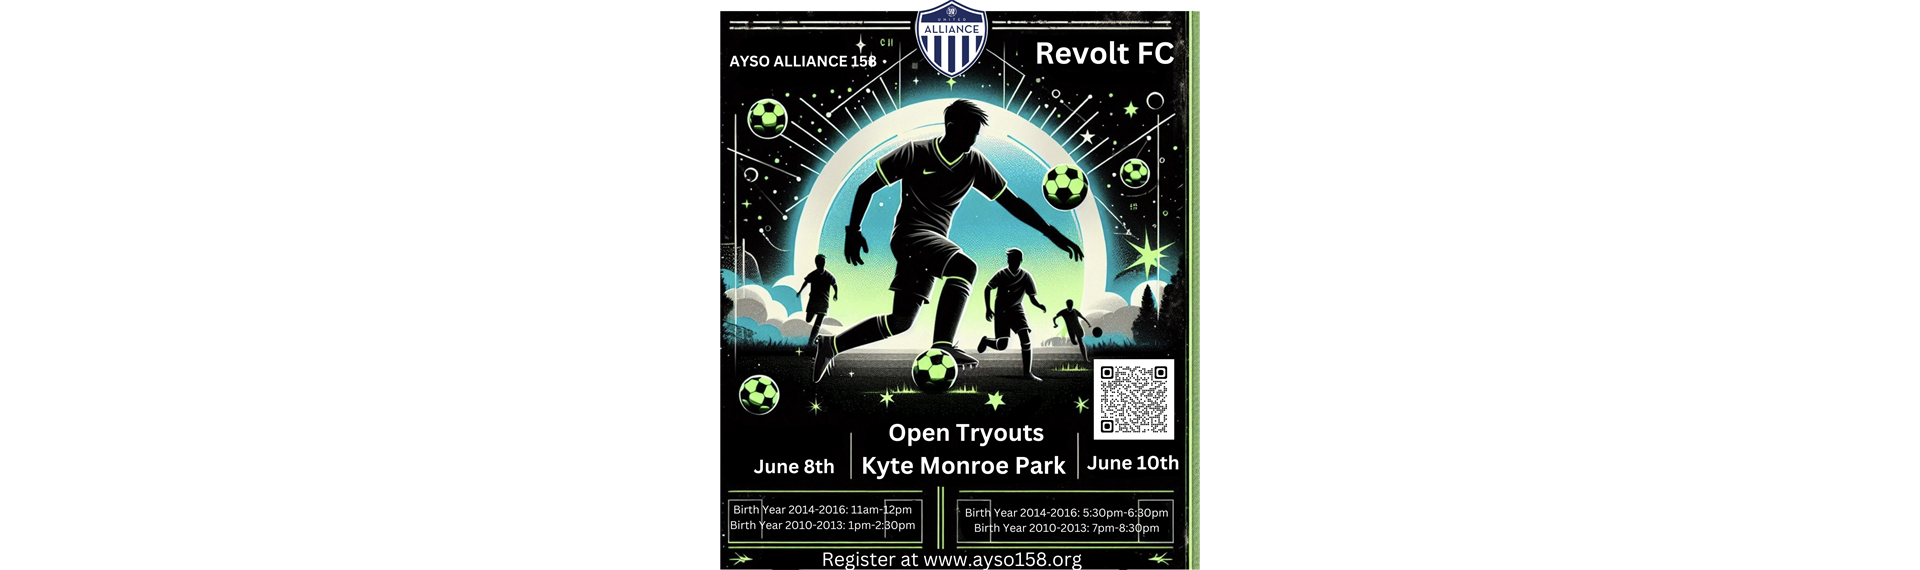 AYSO Alliance 158/Revolt FC Tryouts